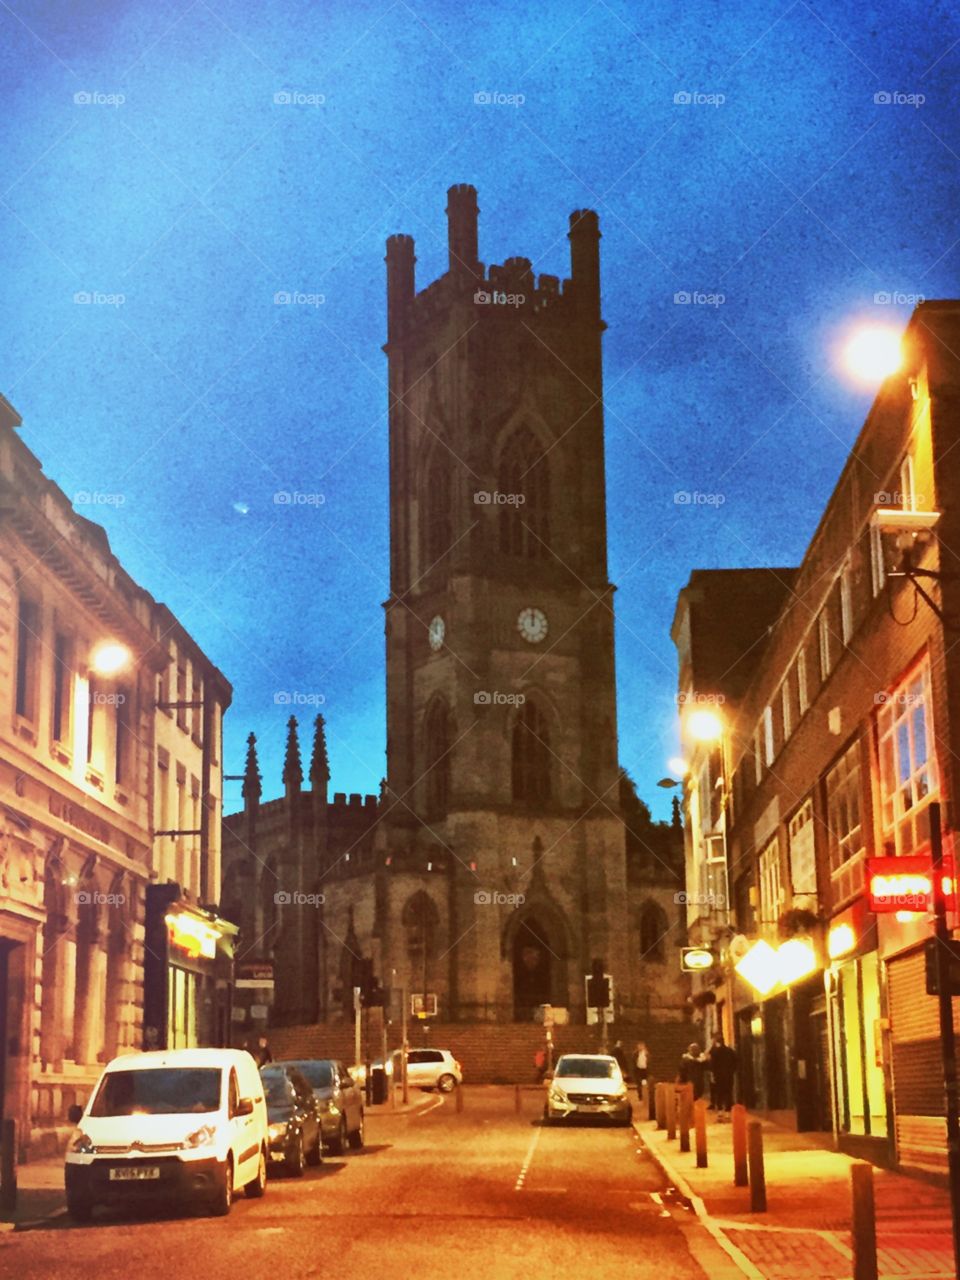 Bold Street Liverpool UK. Looking up Bold St towards St Luke's Church. Summer evening 2015